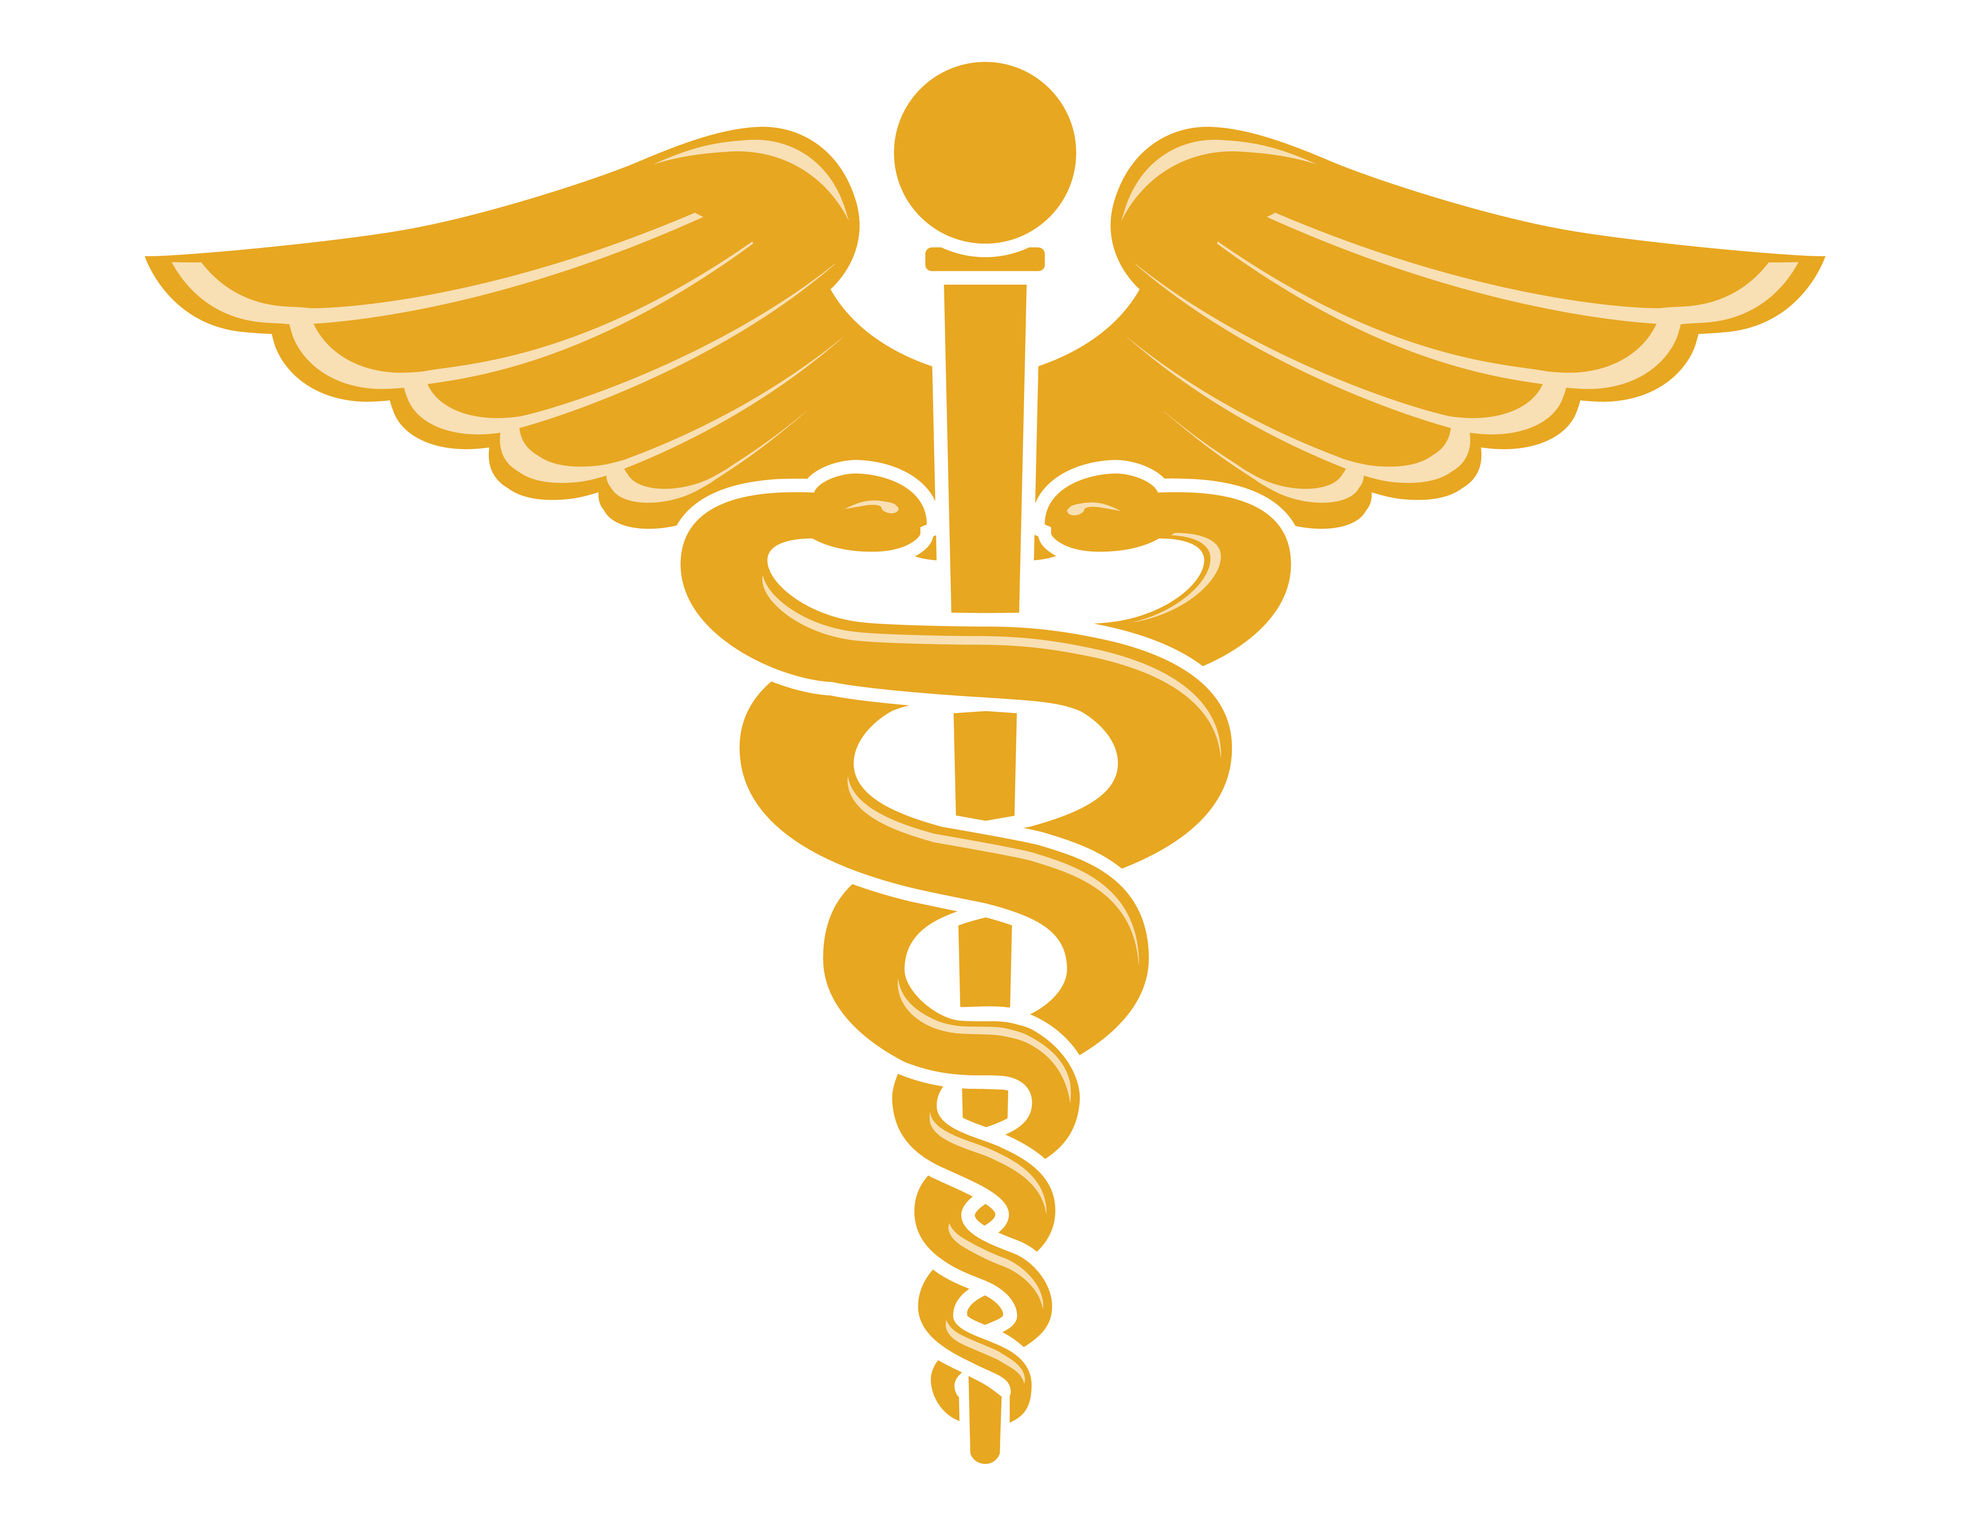 universal health care symbol